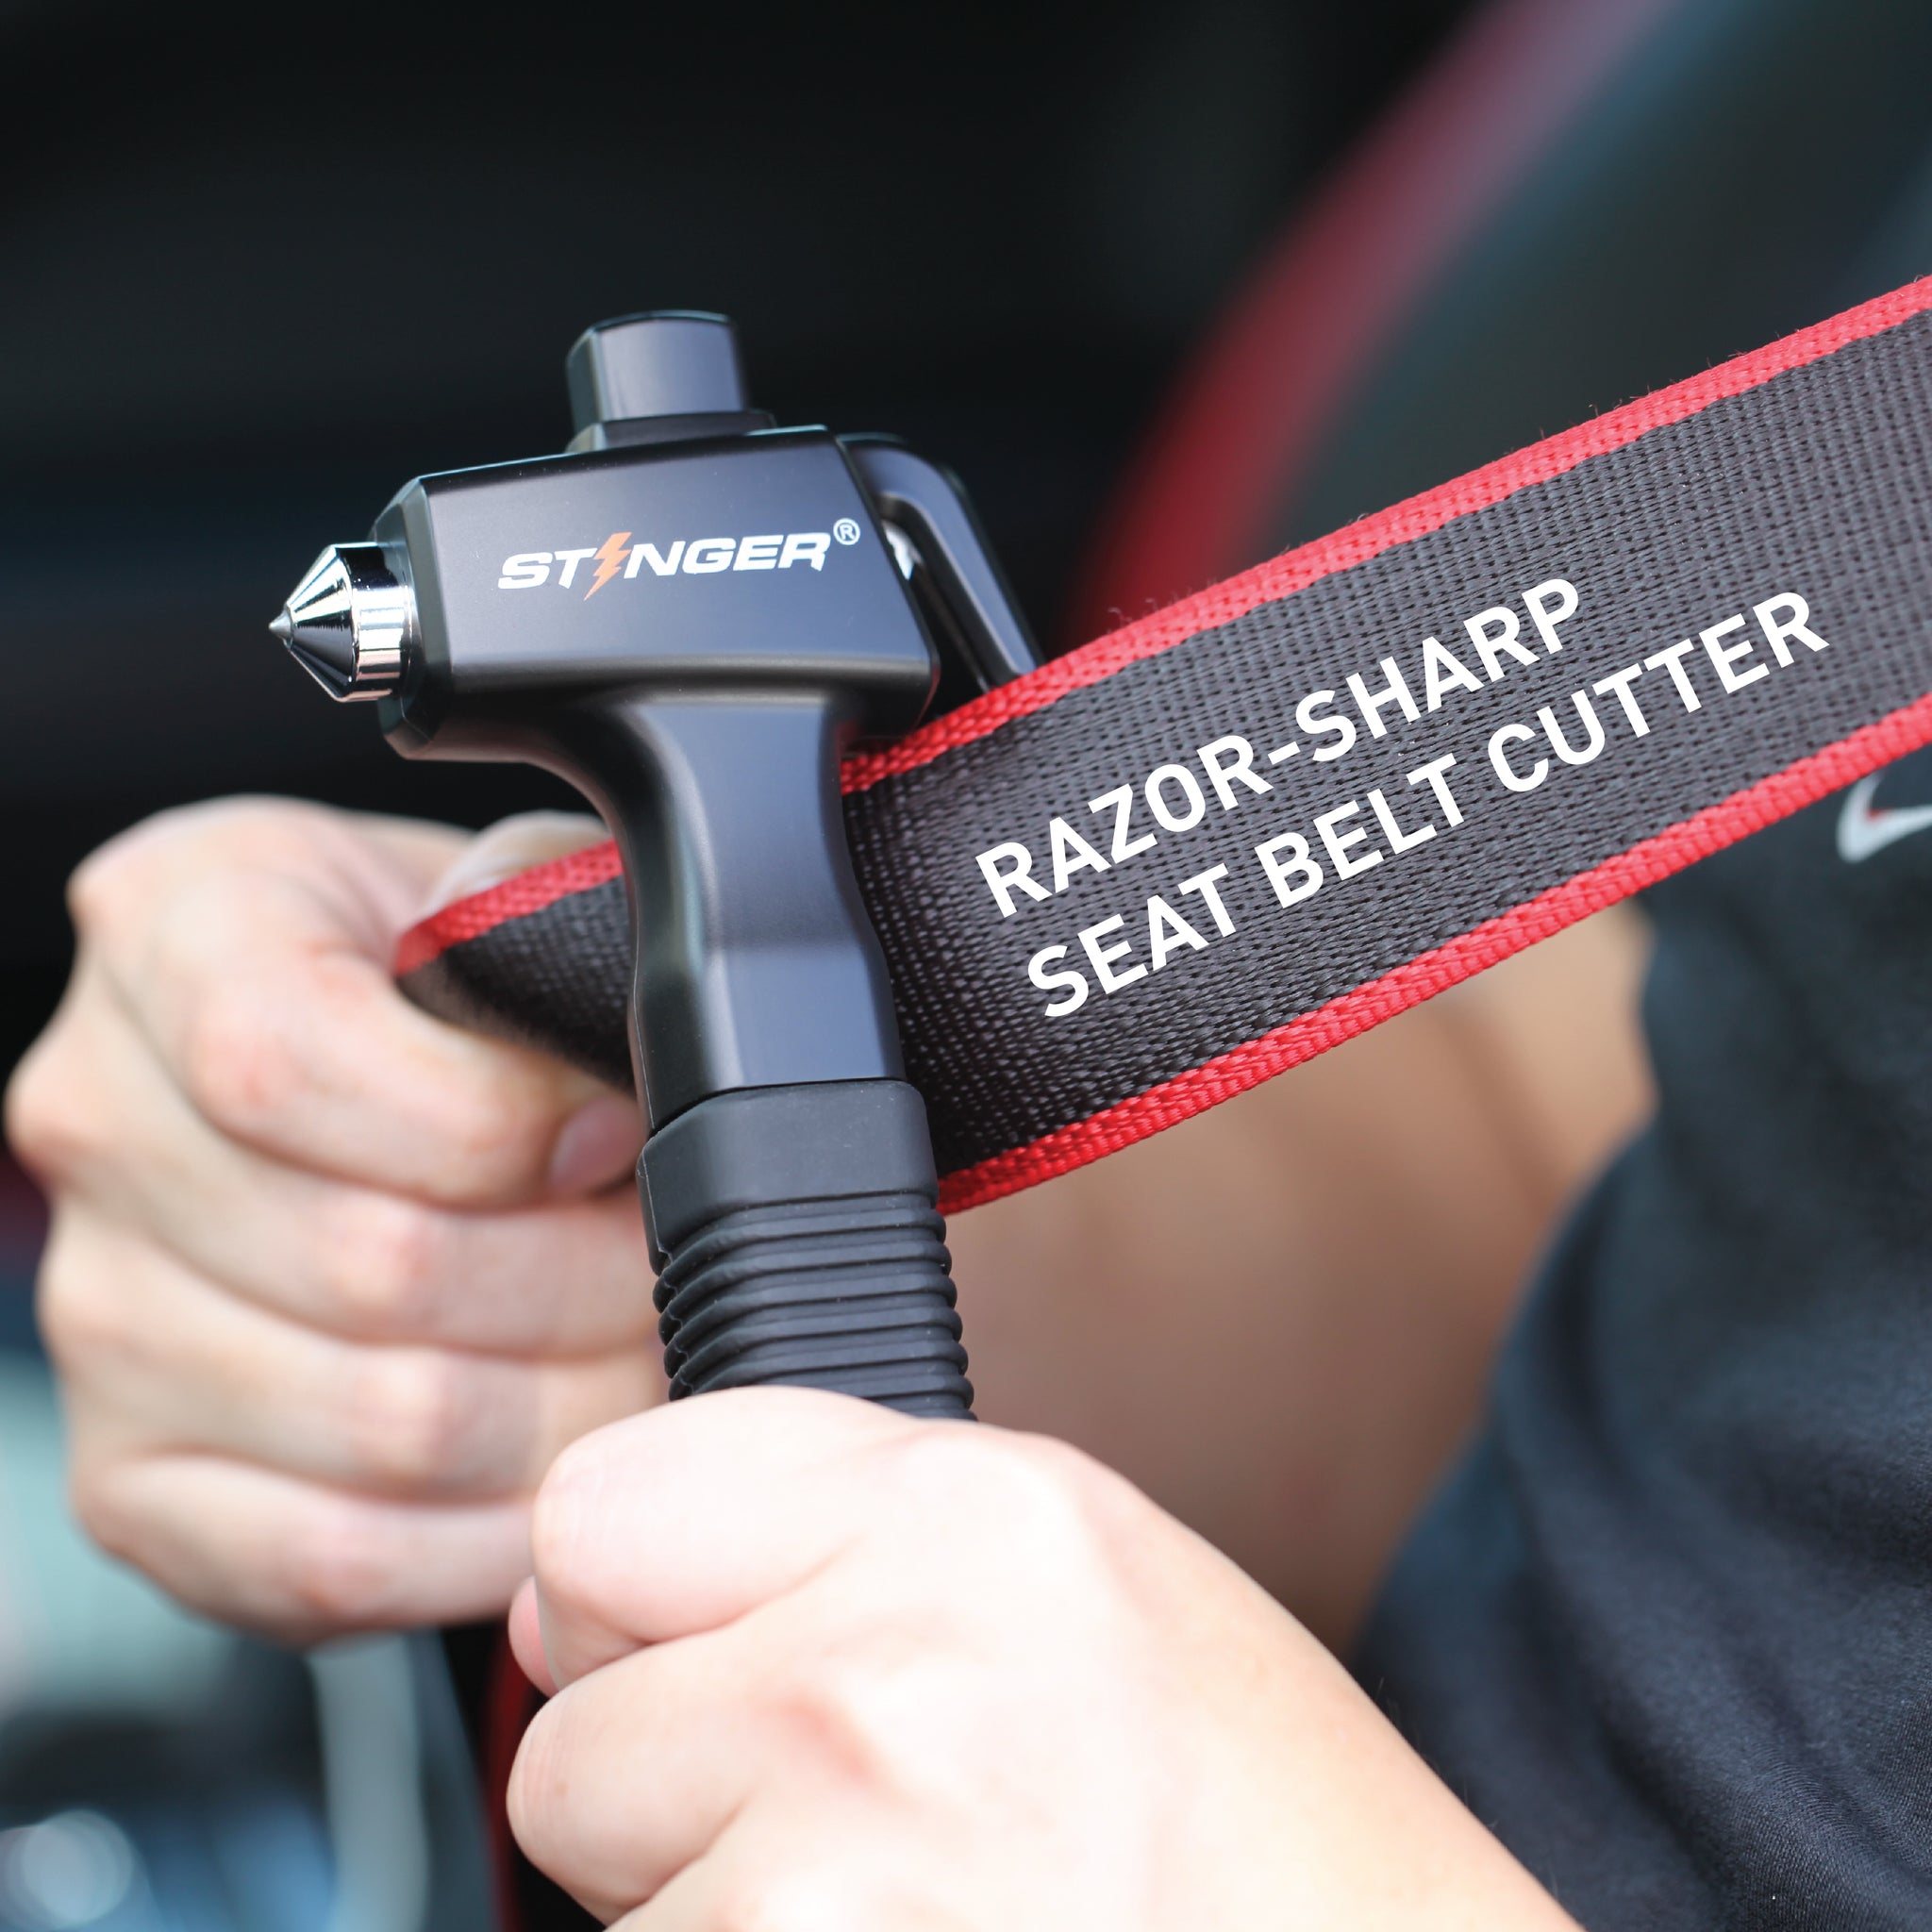 3 Pcs Car Safety Seat Belt Cutter Emergency Emergency Hammer Safety Hammer  Key Black